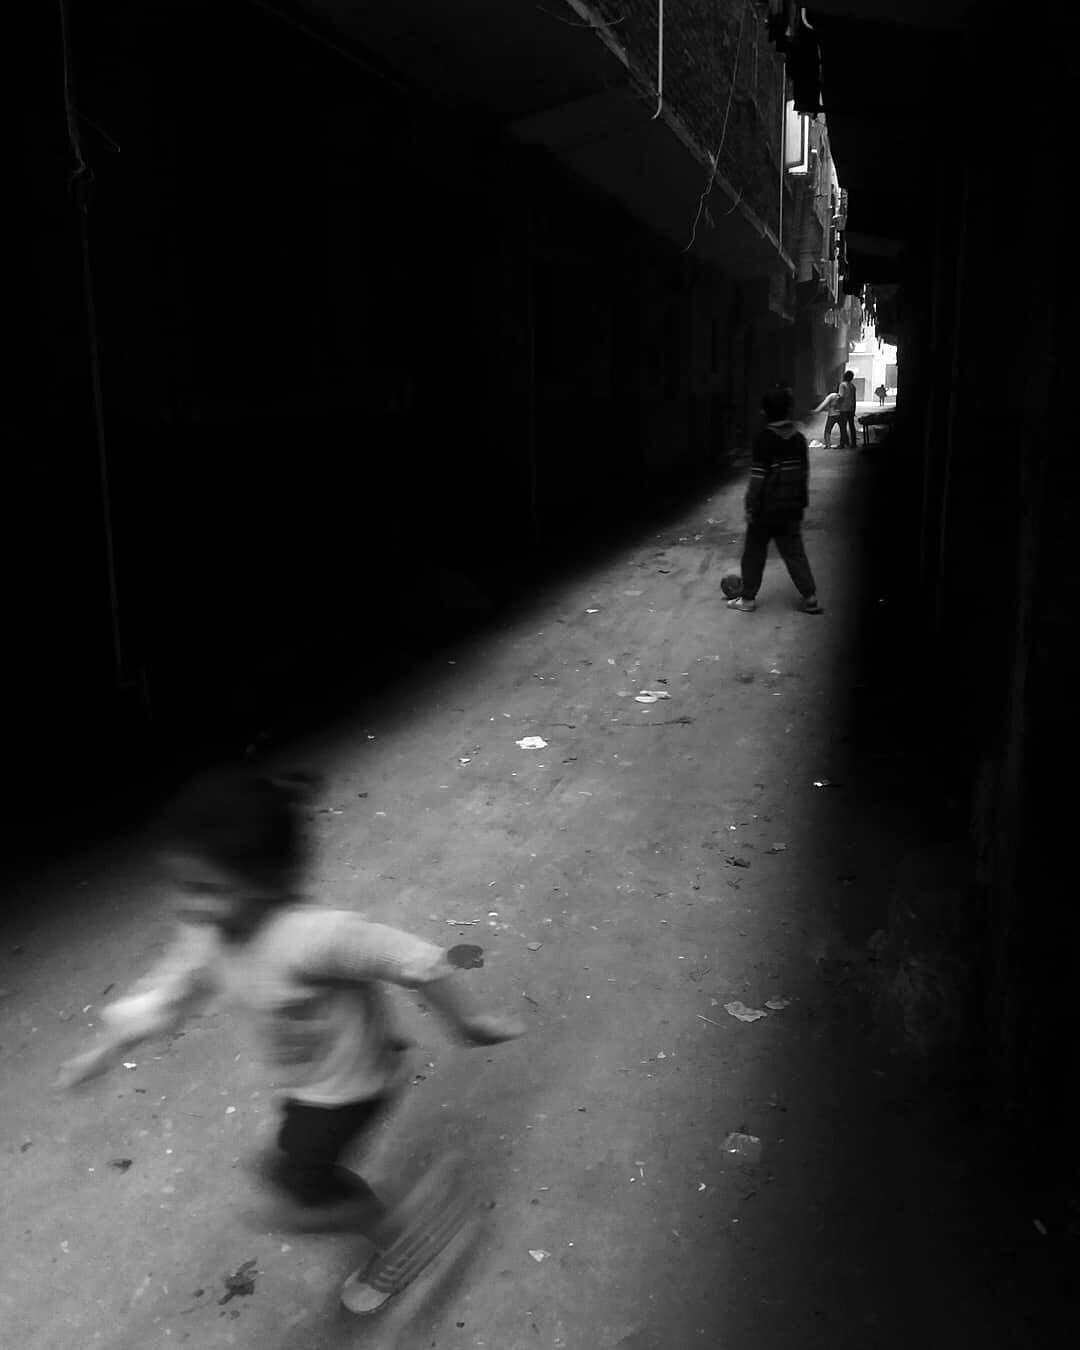 Photo by @muetasem_711 #documentaryphotography #streetphotography #blackandwhitephoto #chiaroscuro #icp #internationalcenterofphotography #photographersgallery #coberlin